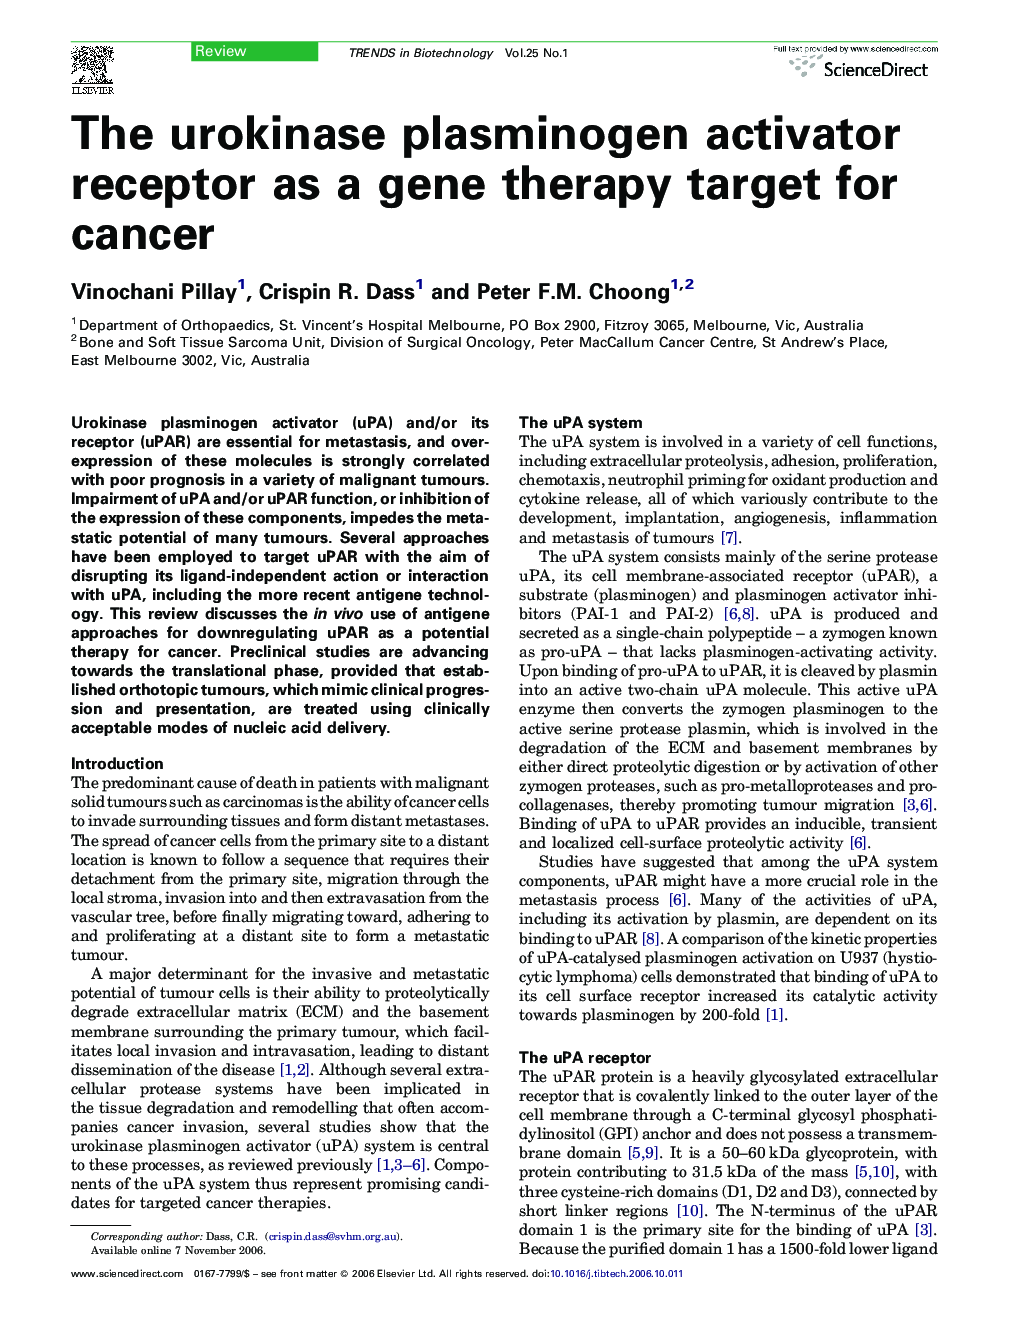 The urokinase plasminogen activator receptor as a gene therapy target for cancer